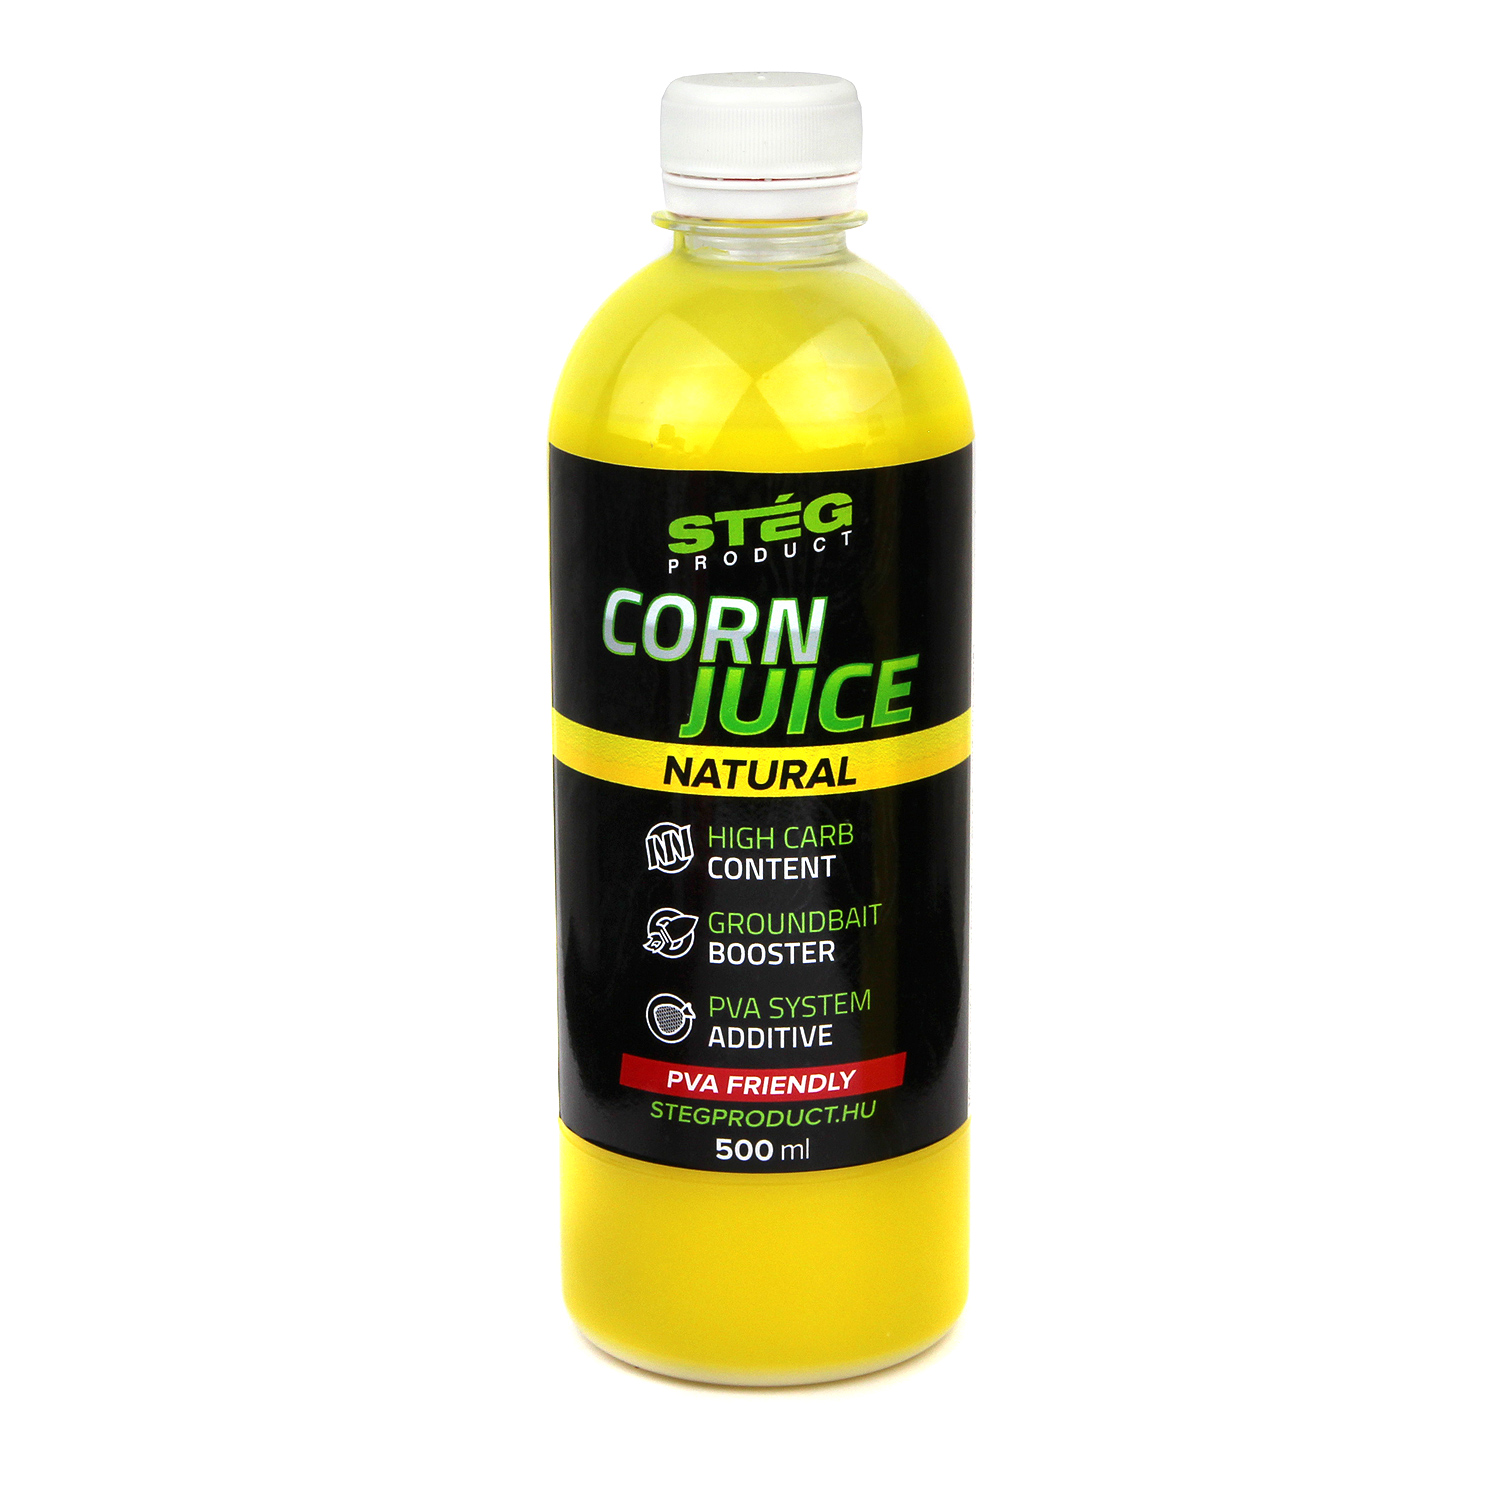 Stg Corn Juice Natural 500ml